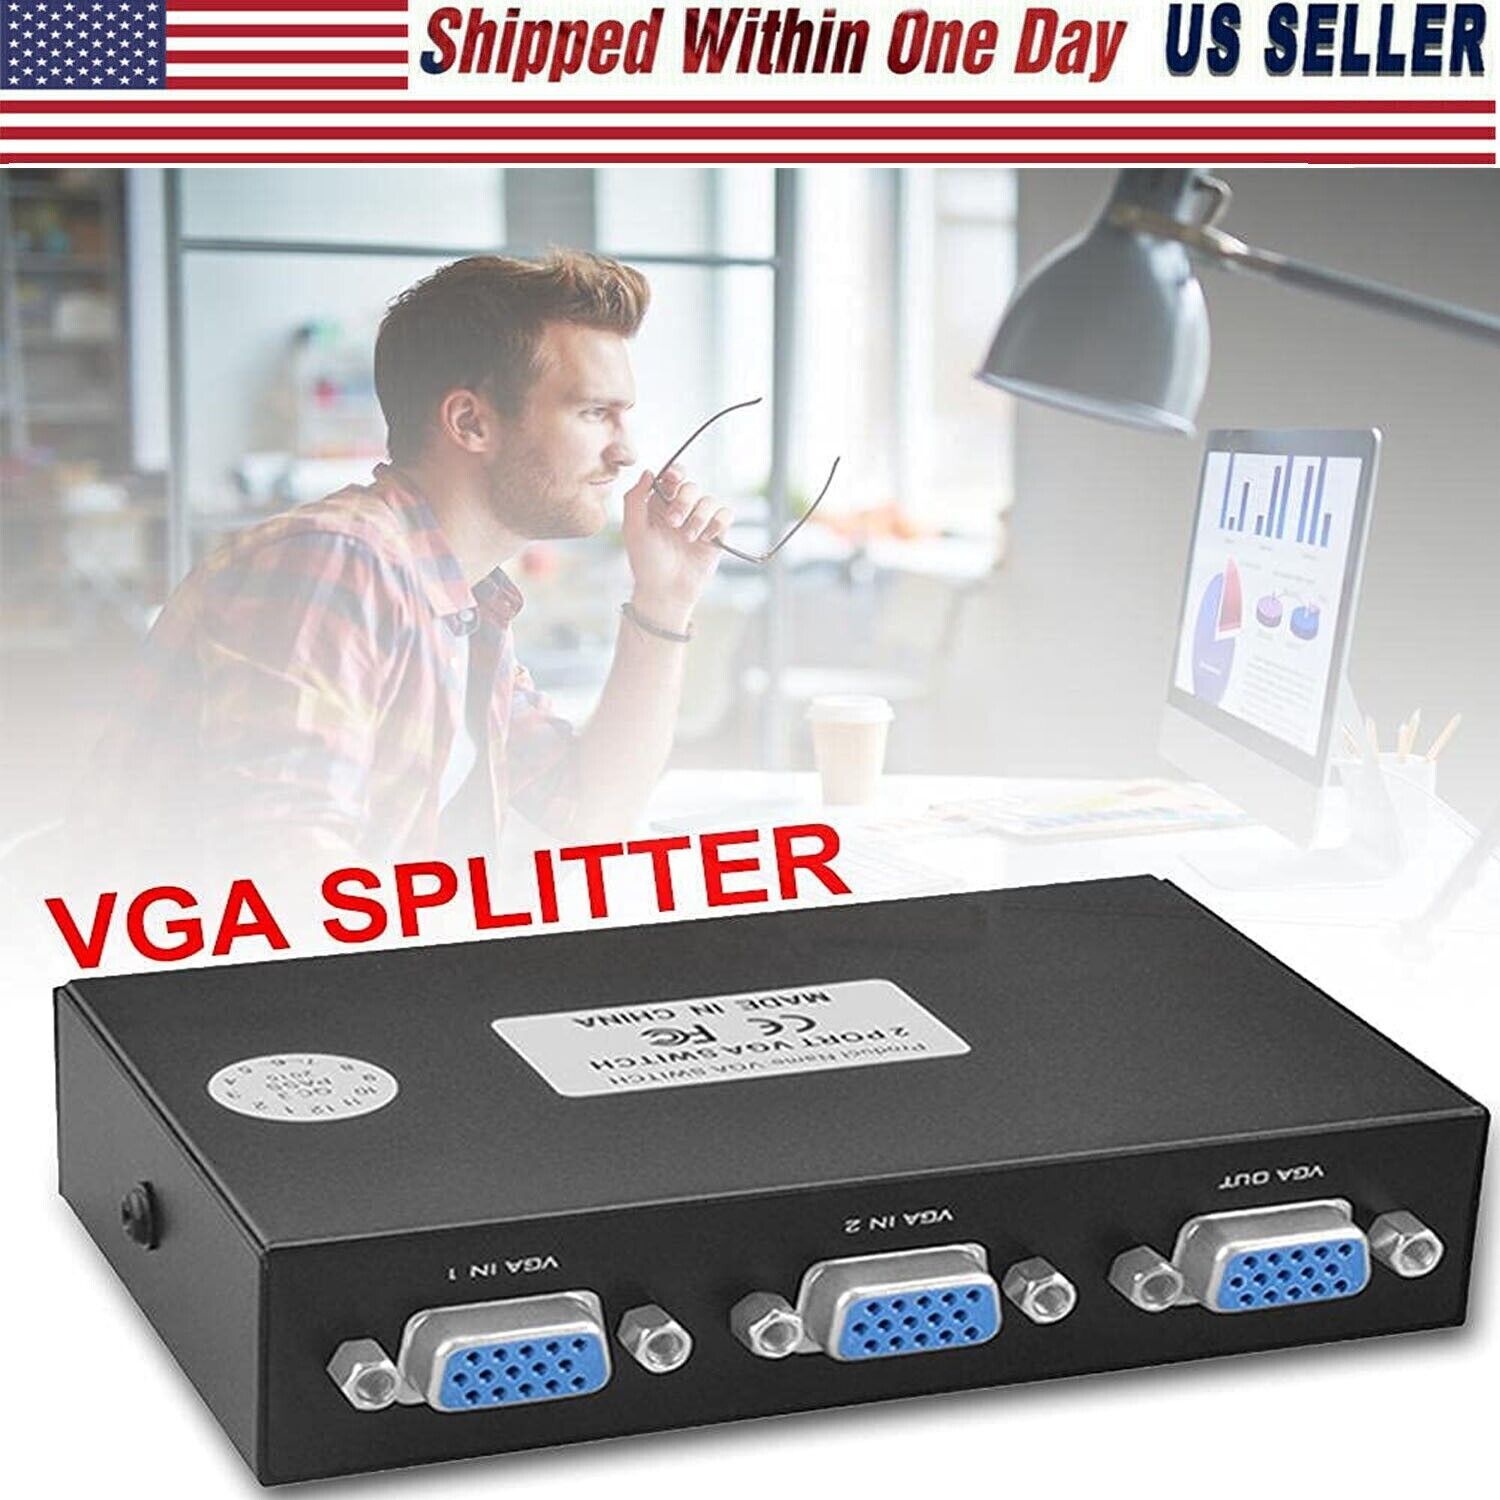 2 Port VGA Splitter 2 Monitor, Sharing Switch Box (2 VGA Out/1 VGA in) US